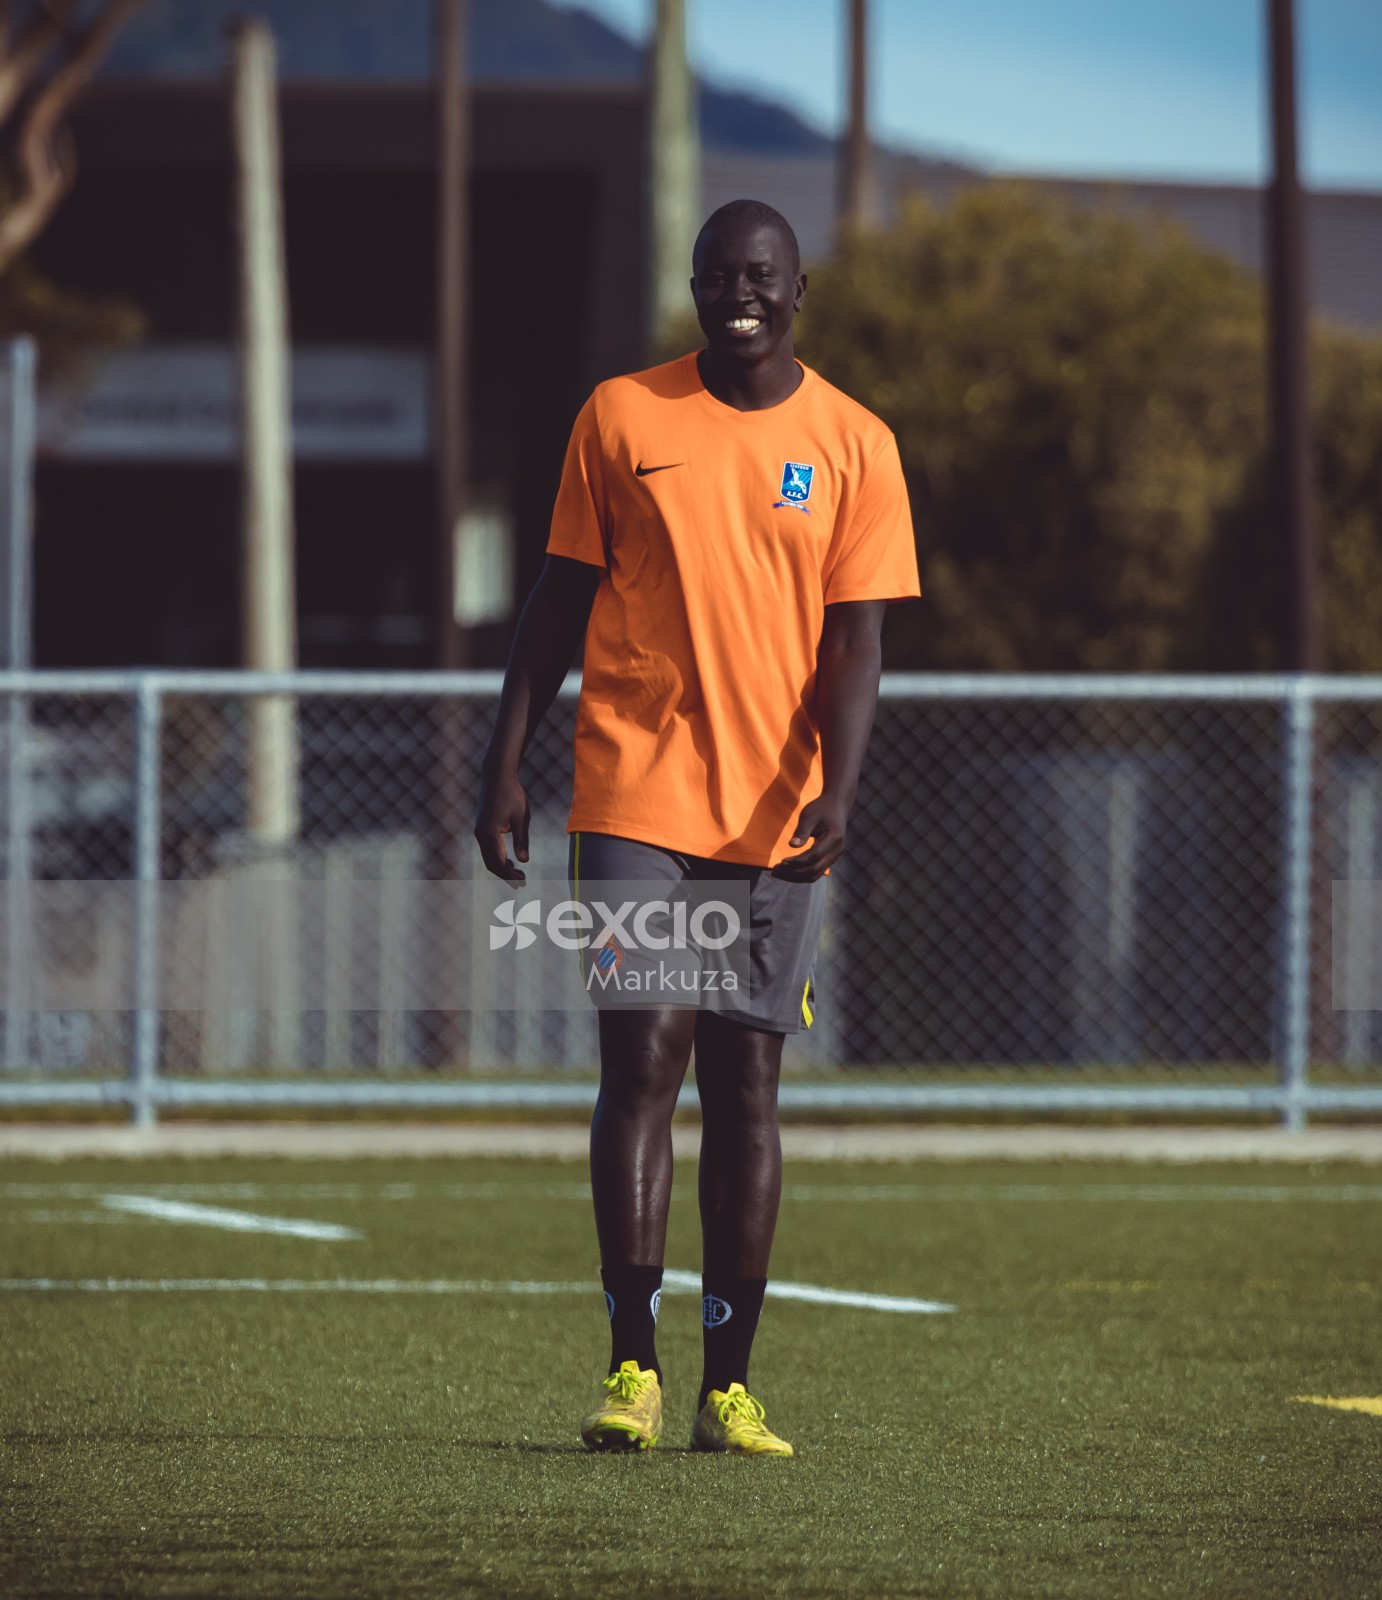 Tall dark skinned football player in orange Nike shirt